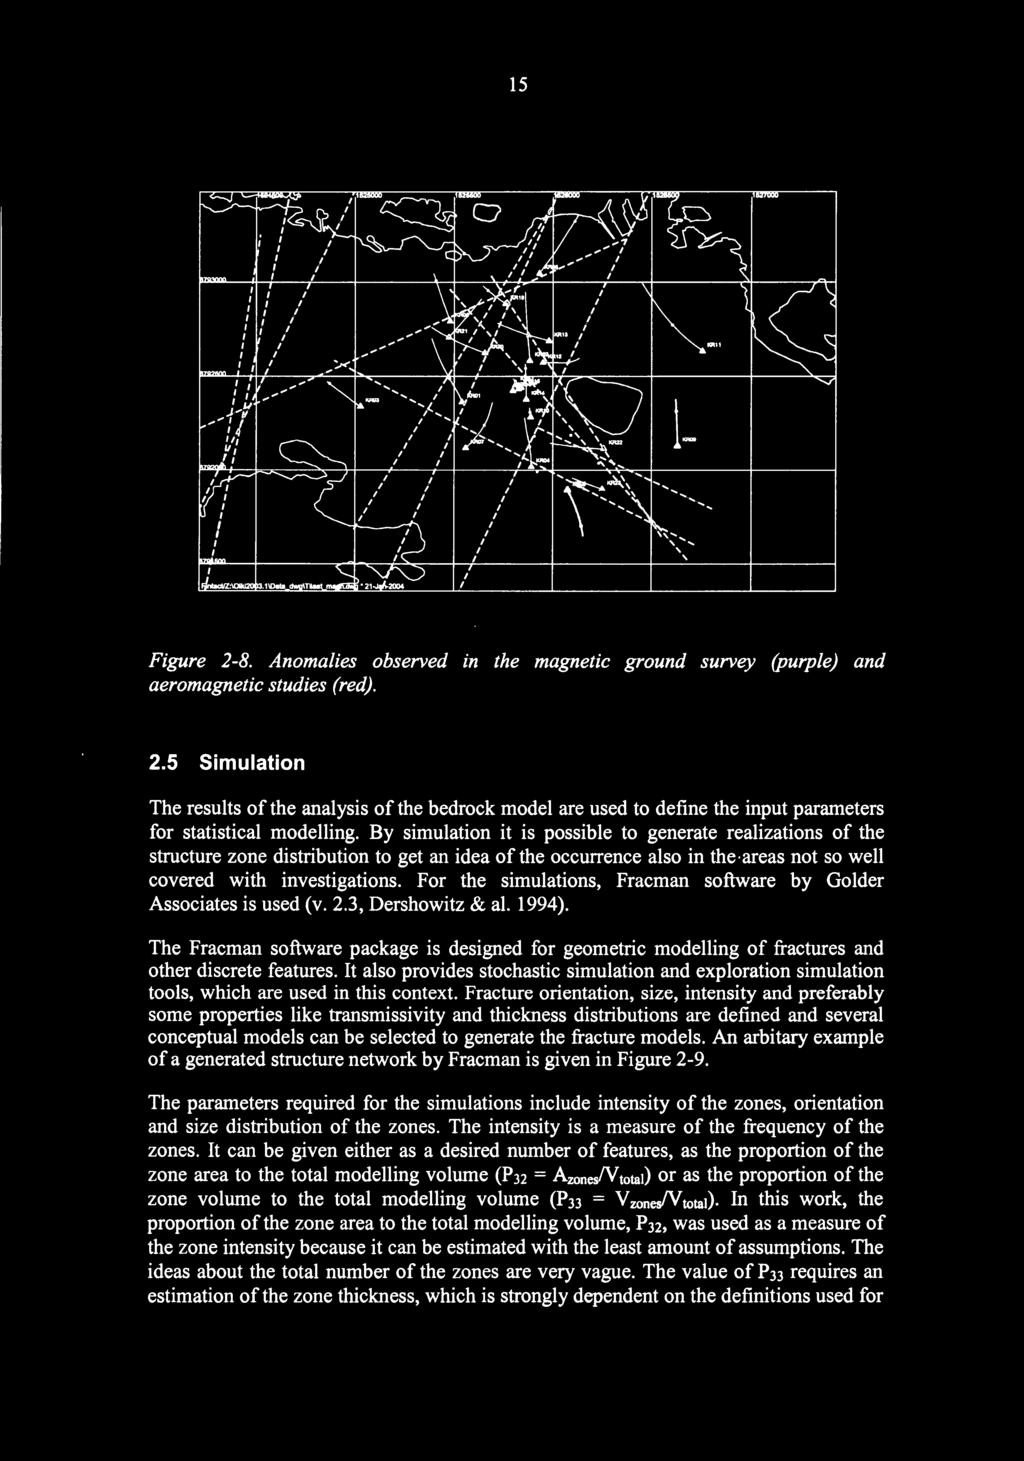 For the simulations, Fracman software by Golder Associates is used (v. 2., Dershowitz & al. 14).